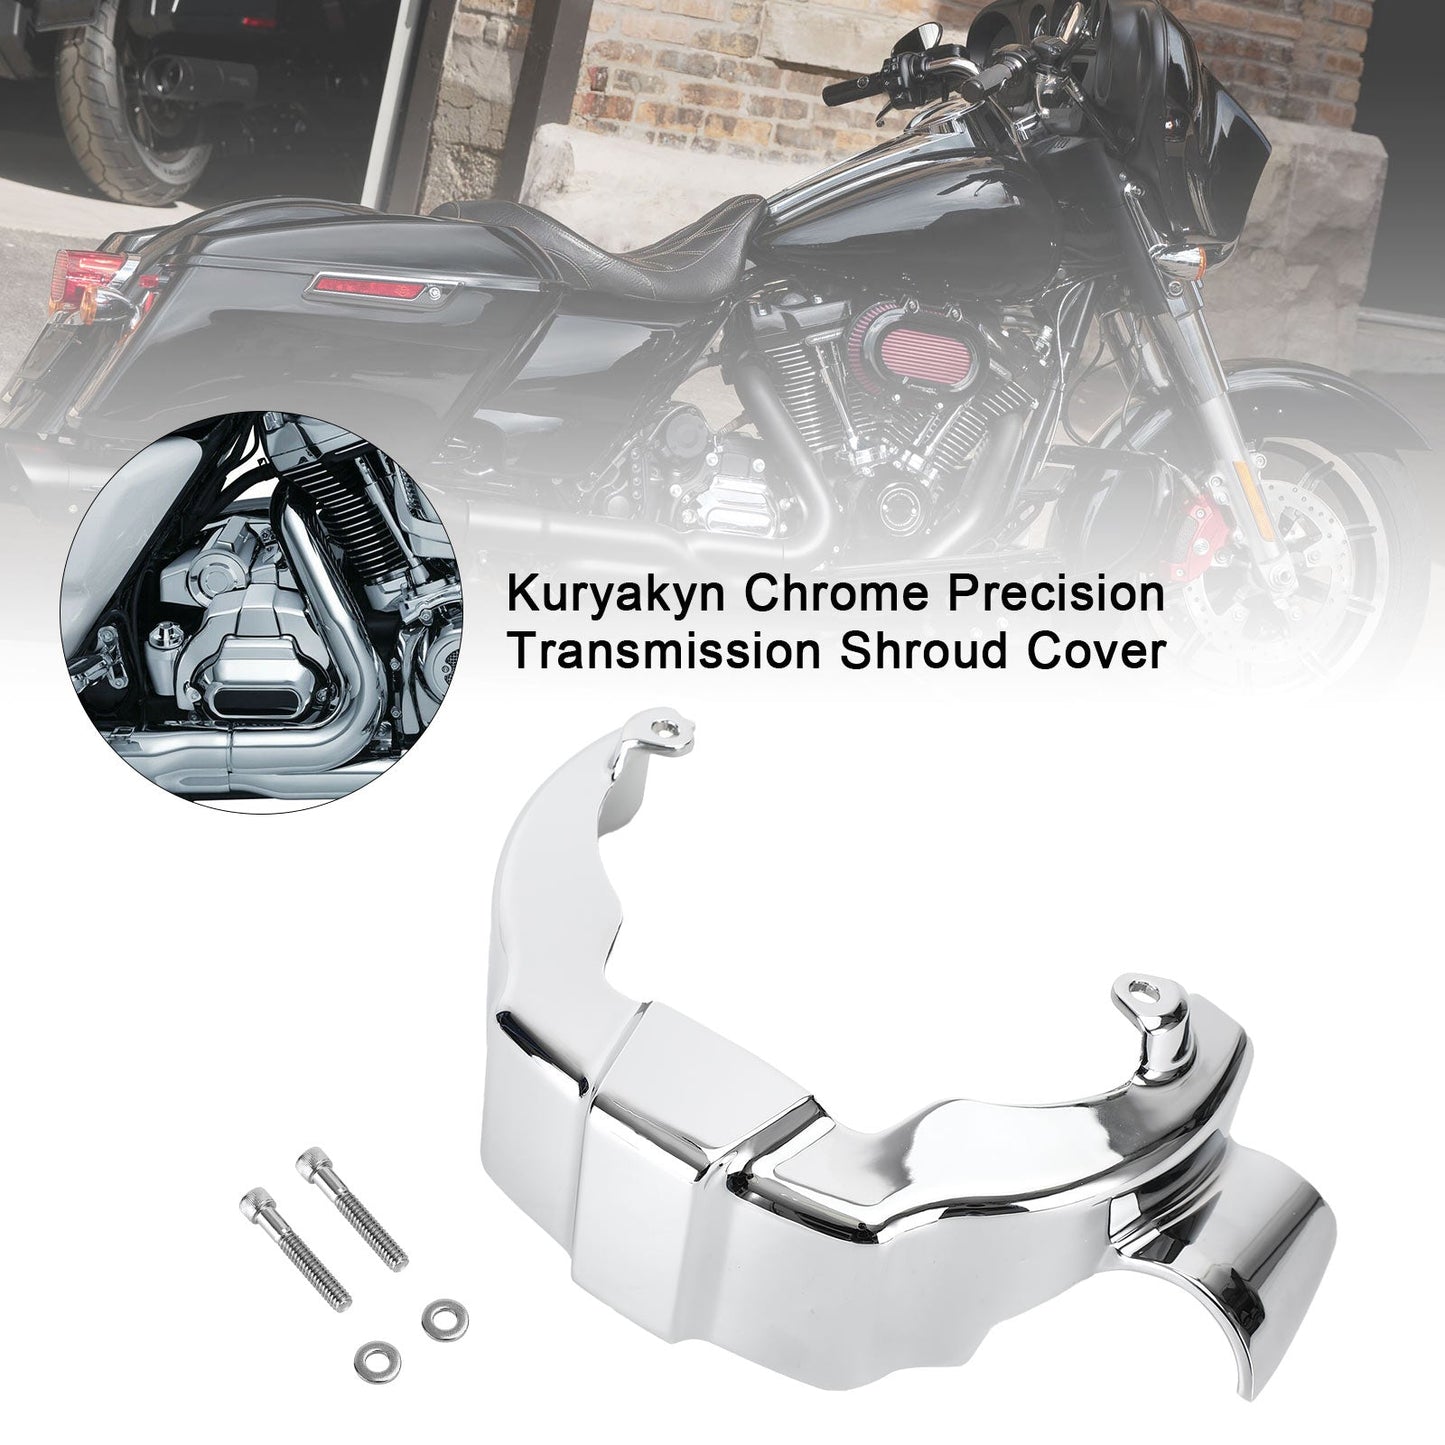 Kuryakyn Chrome Precision Transmission Shroud Cover for Milwaukee M8 2017-2020